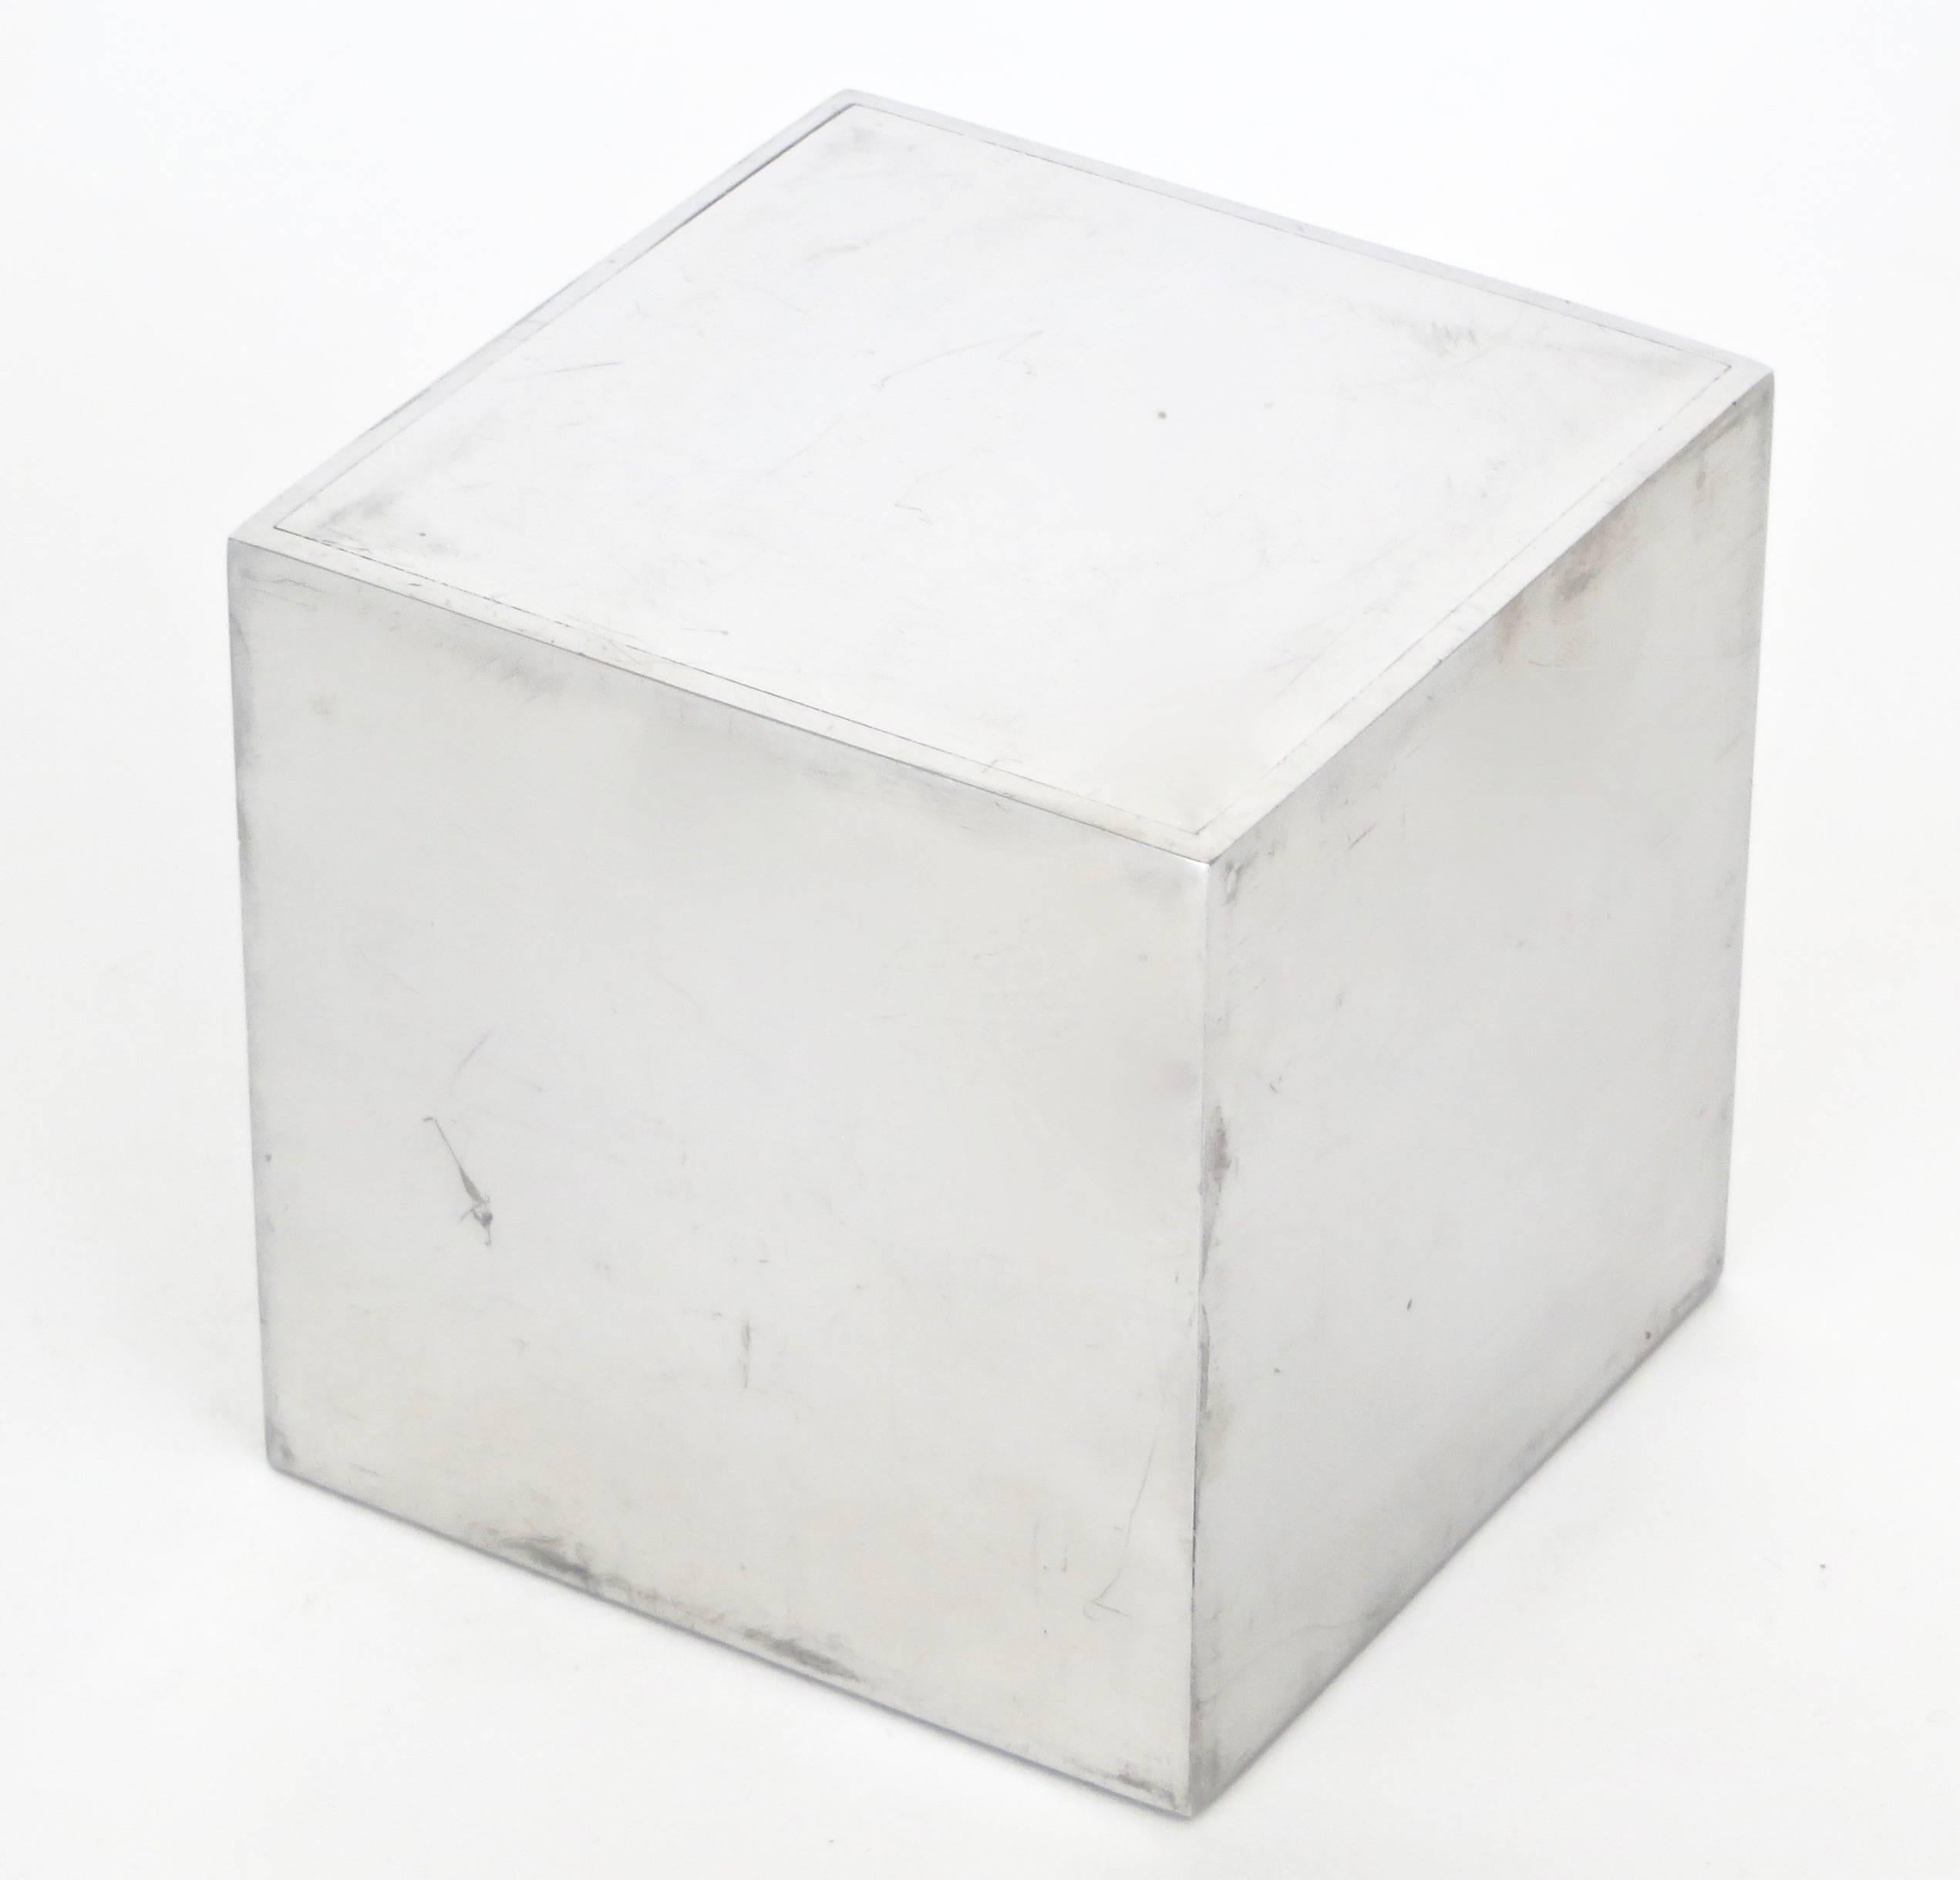 Mid-Century Modern Nickled Chrome Cube by Design Line El Segundo California